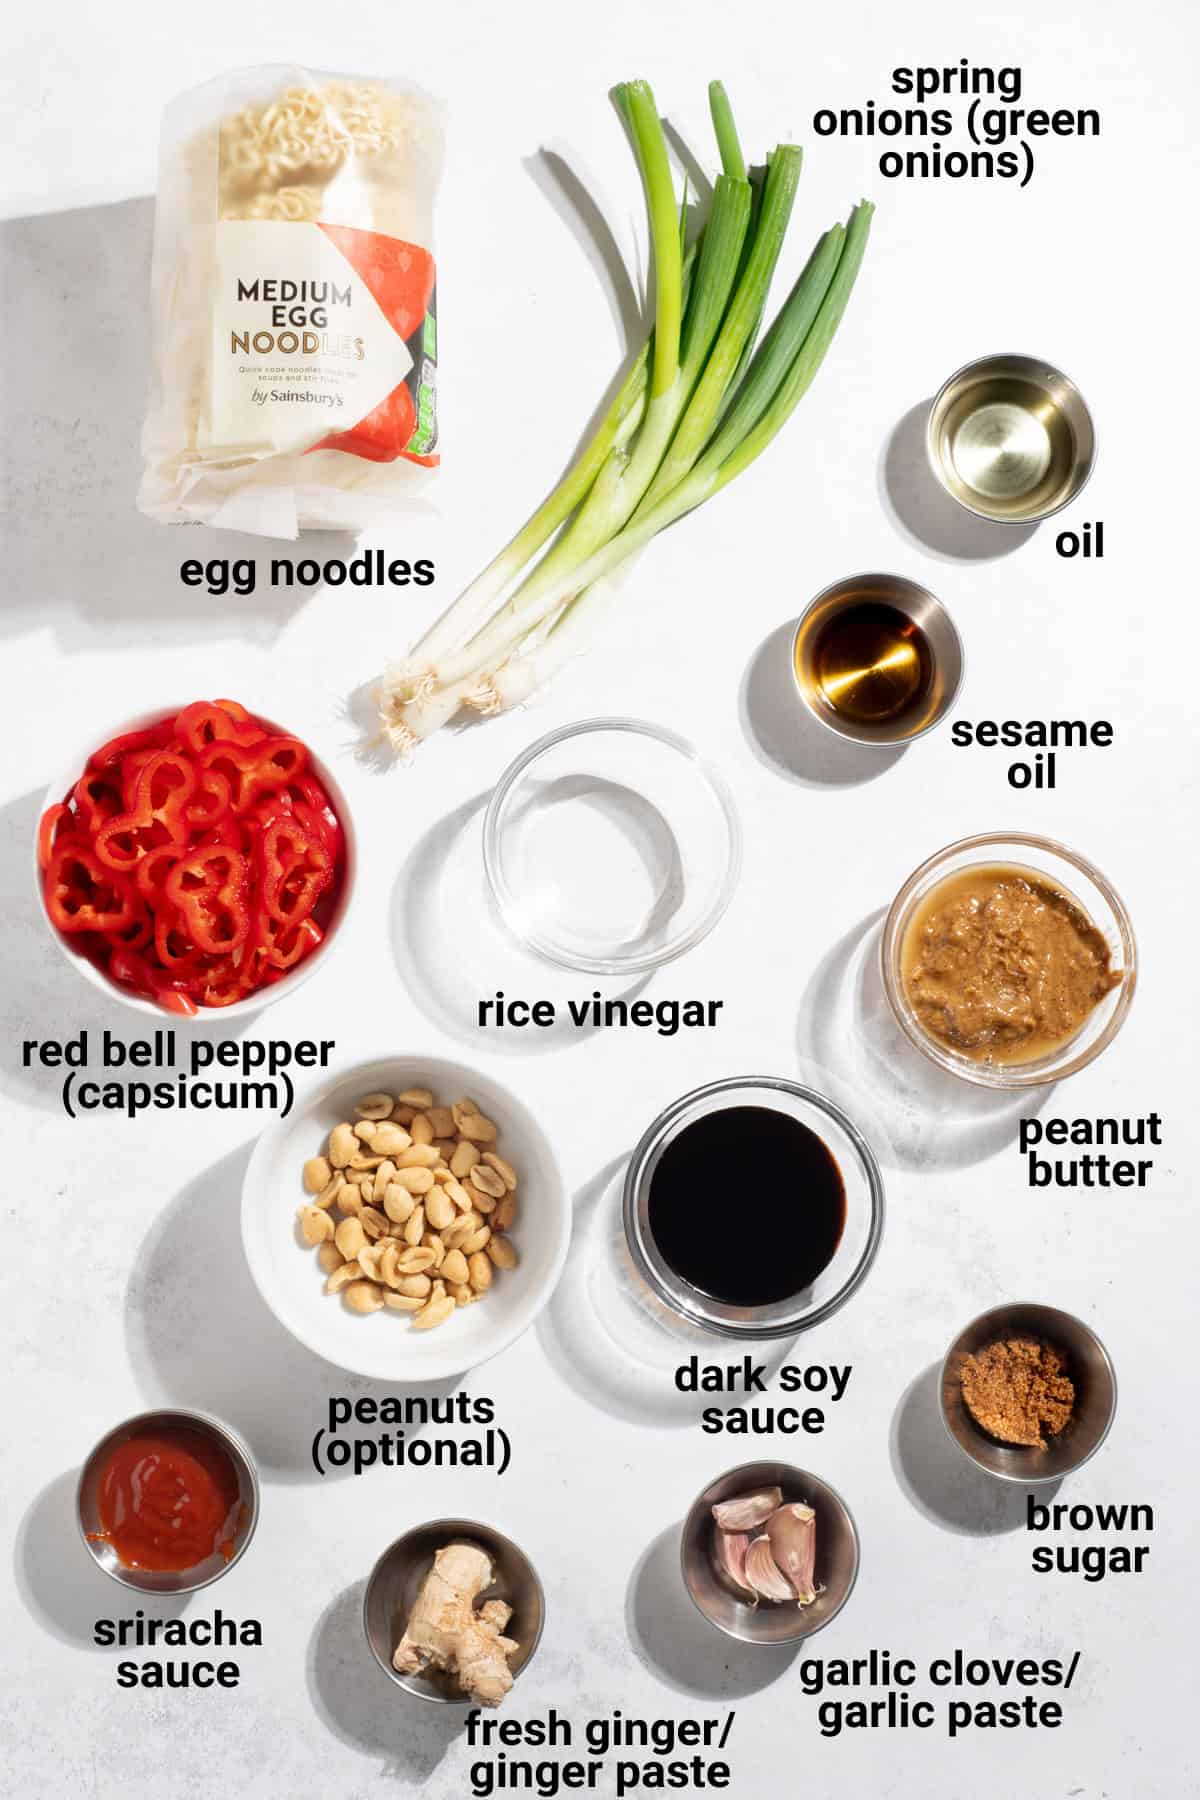 Sriracha noodles ingredients.